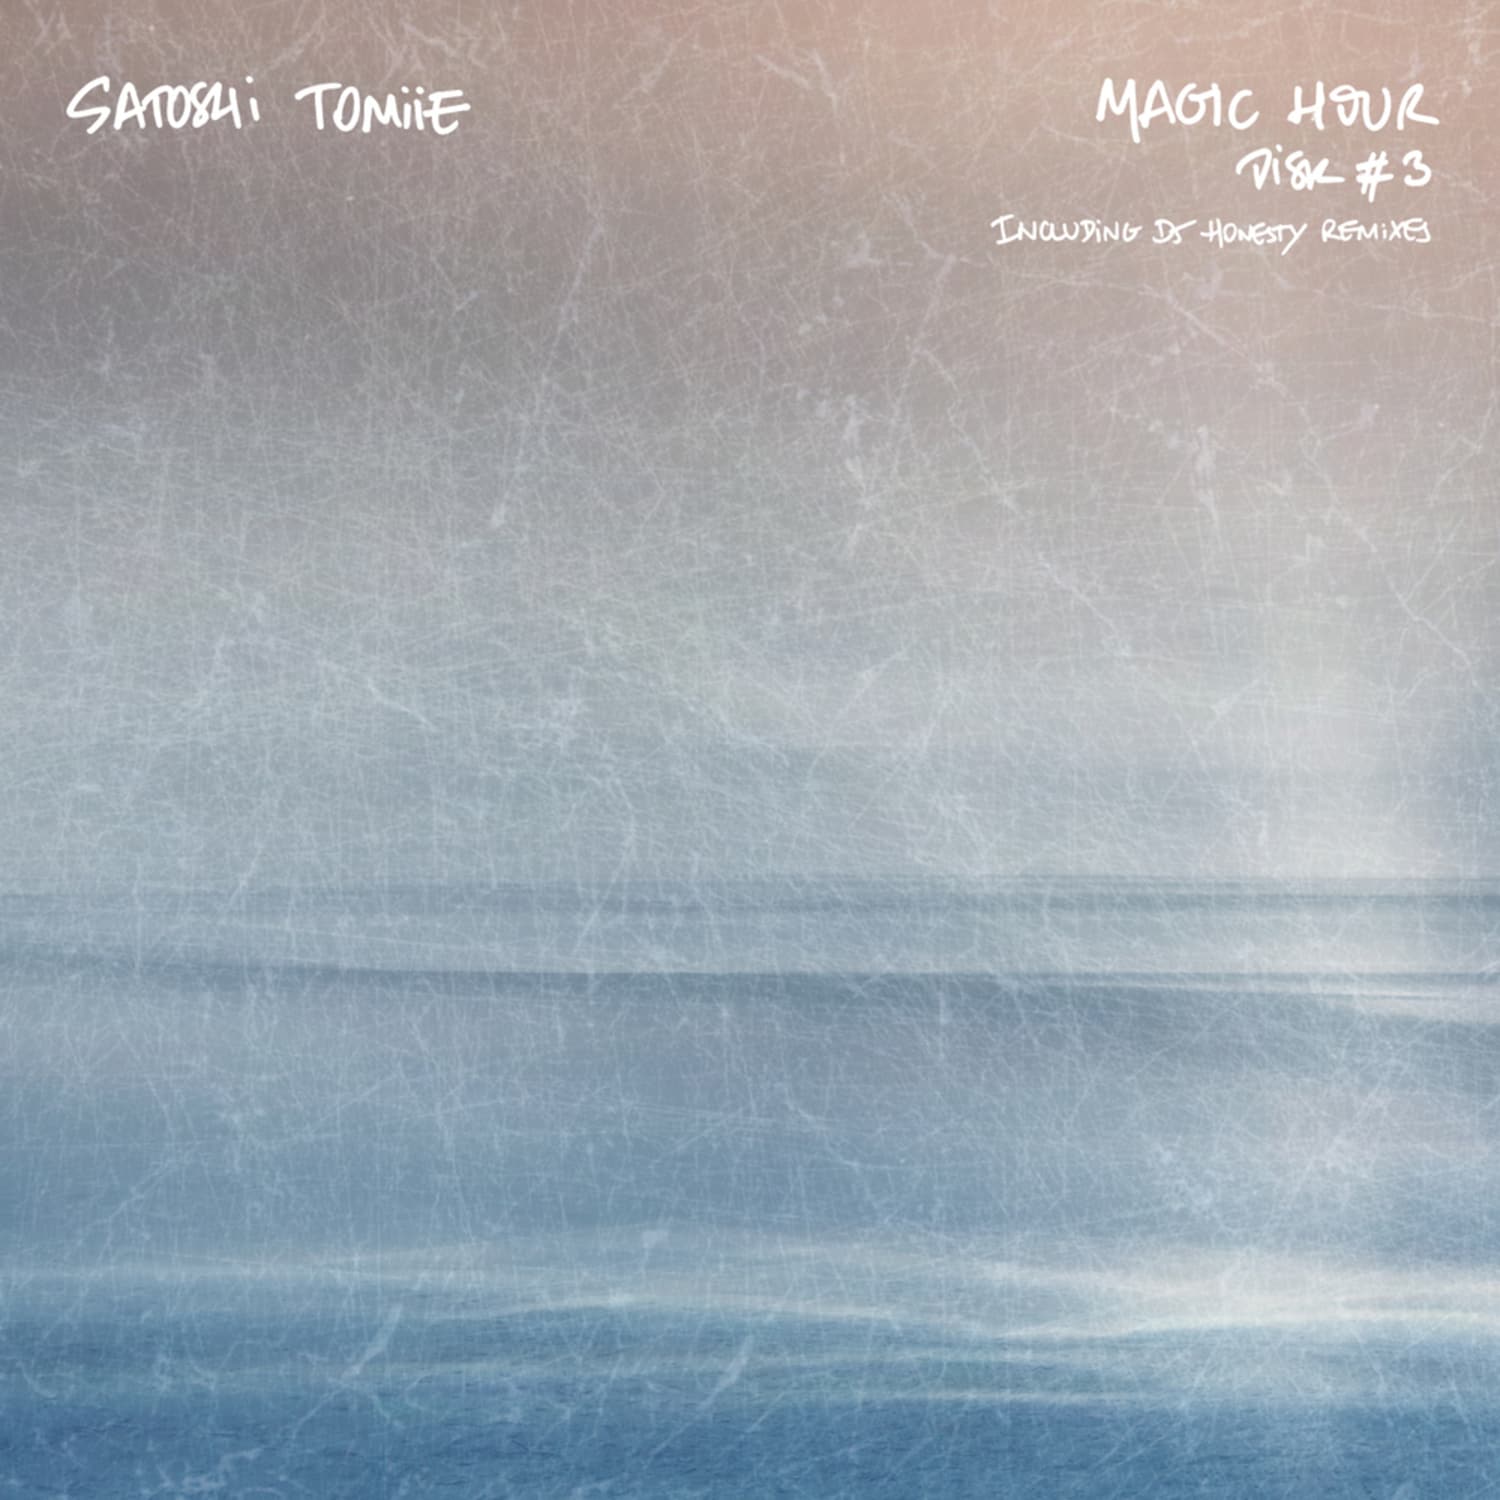 Satoshi Tomiie - MAGIC HOUR DISK #3 WAVE DUB